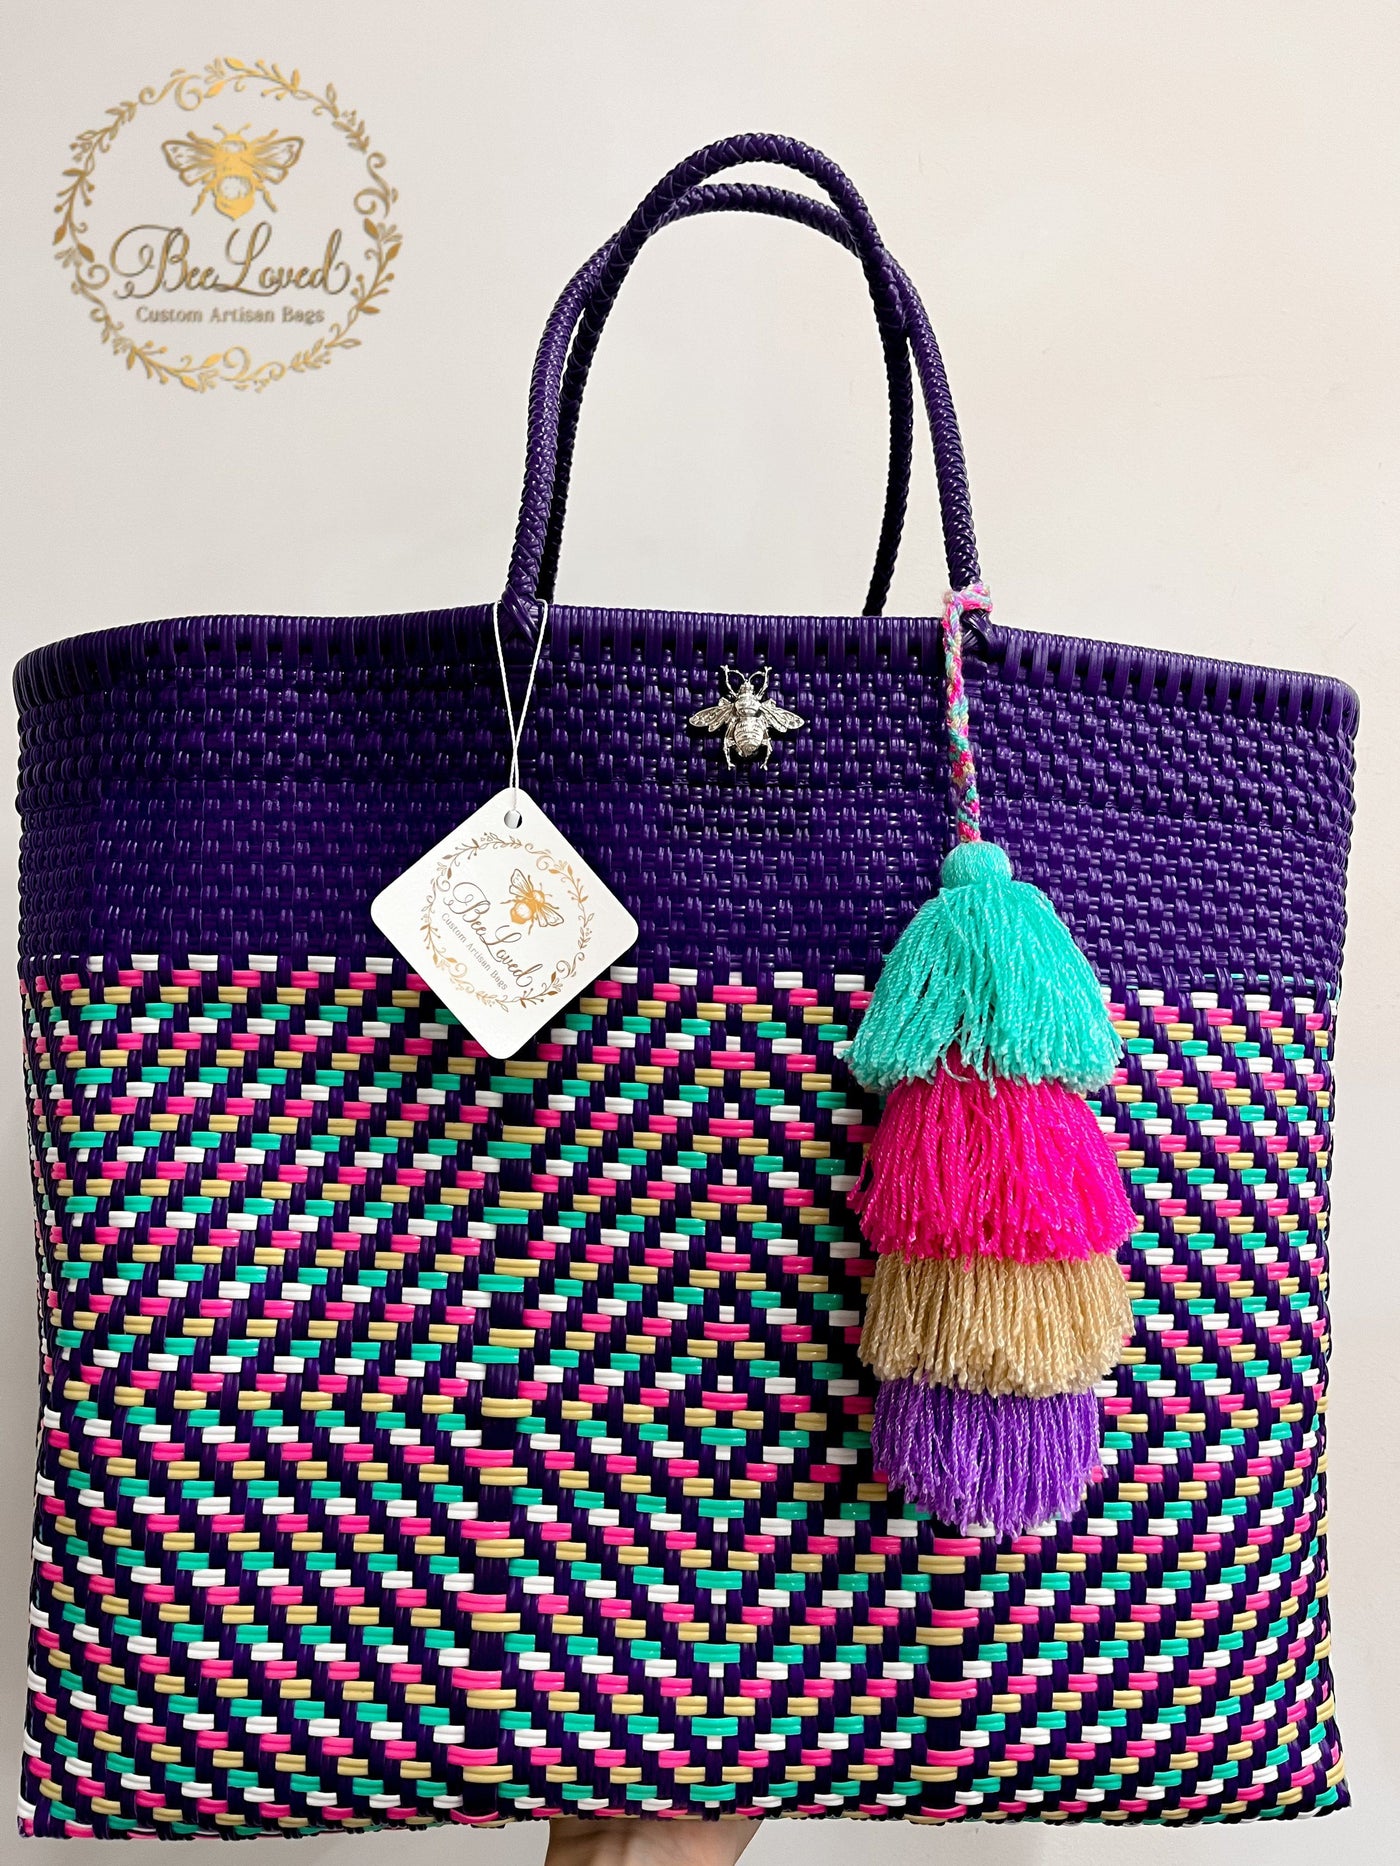 BeeLoved Custom Artisan Bags and Gifts Handbags XL Alexa Beech Bag